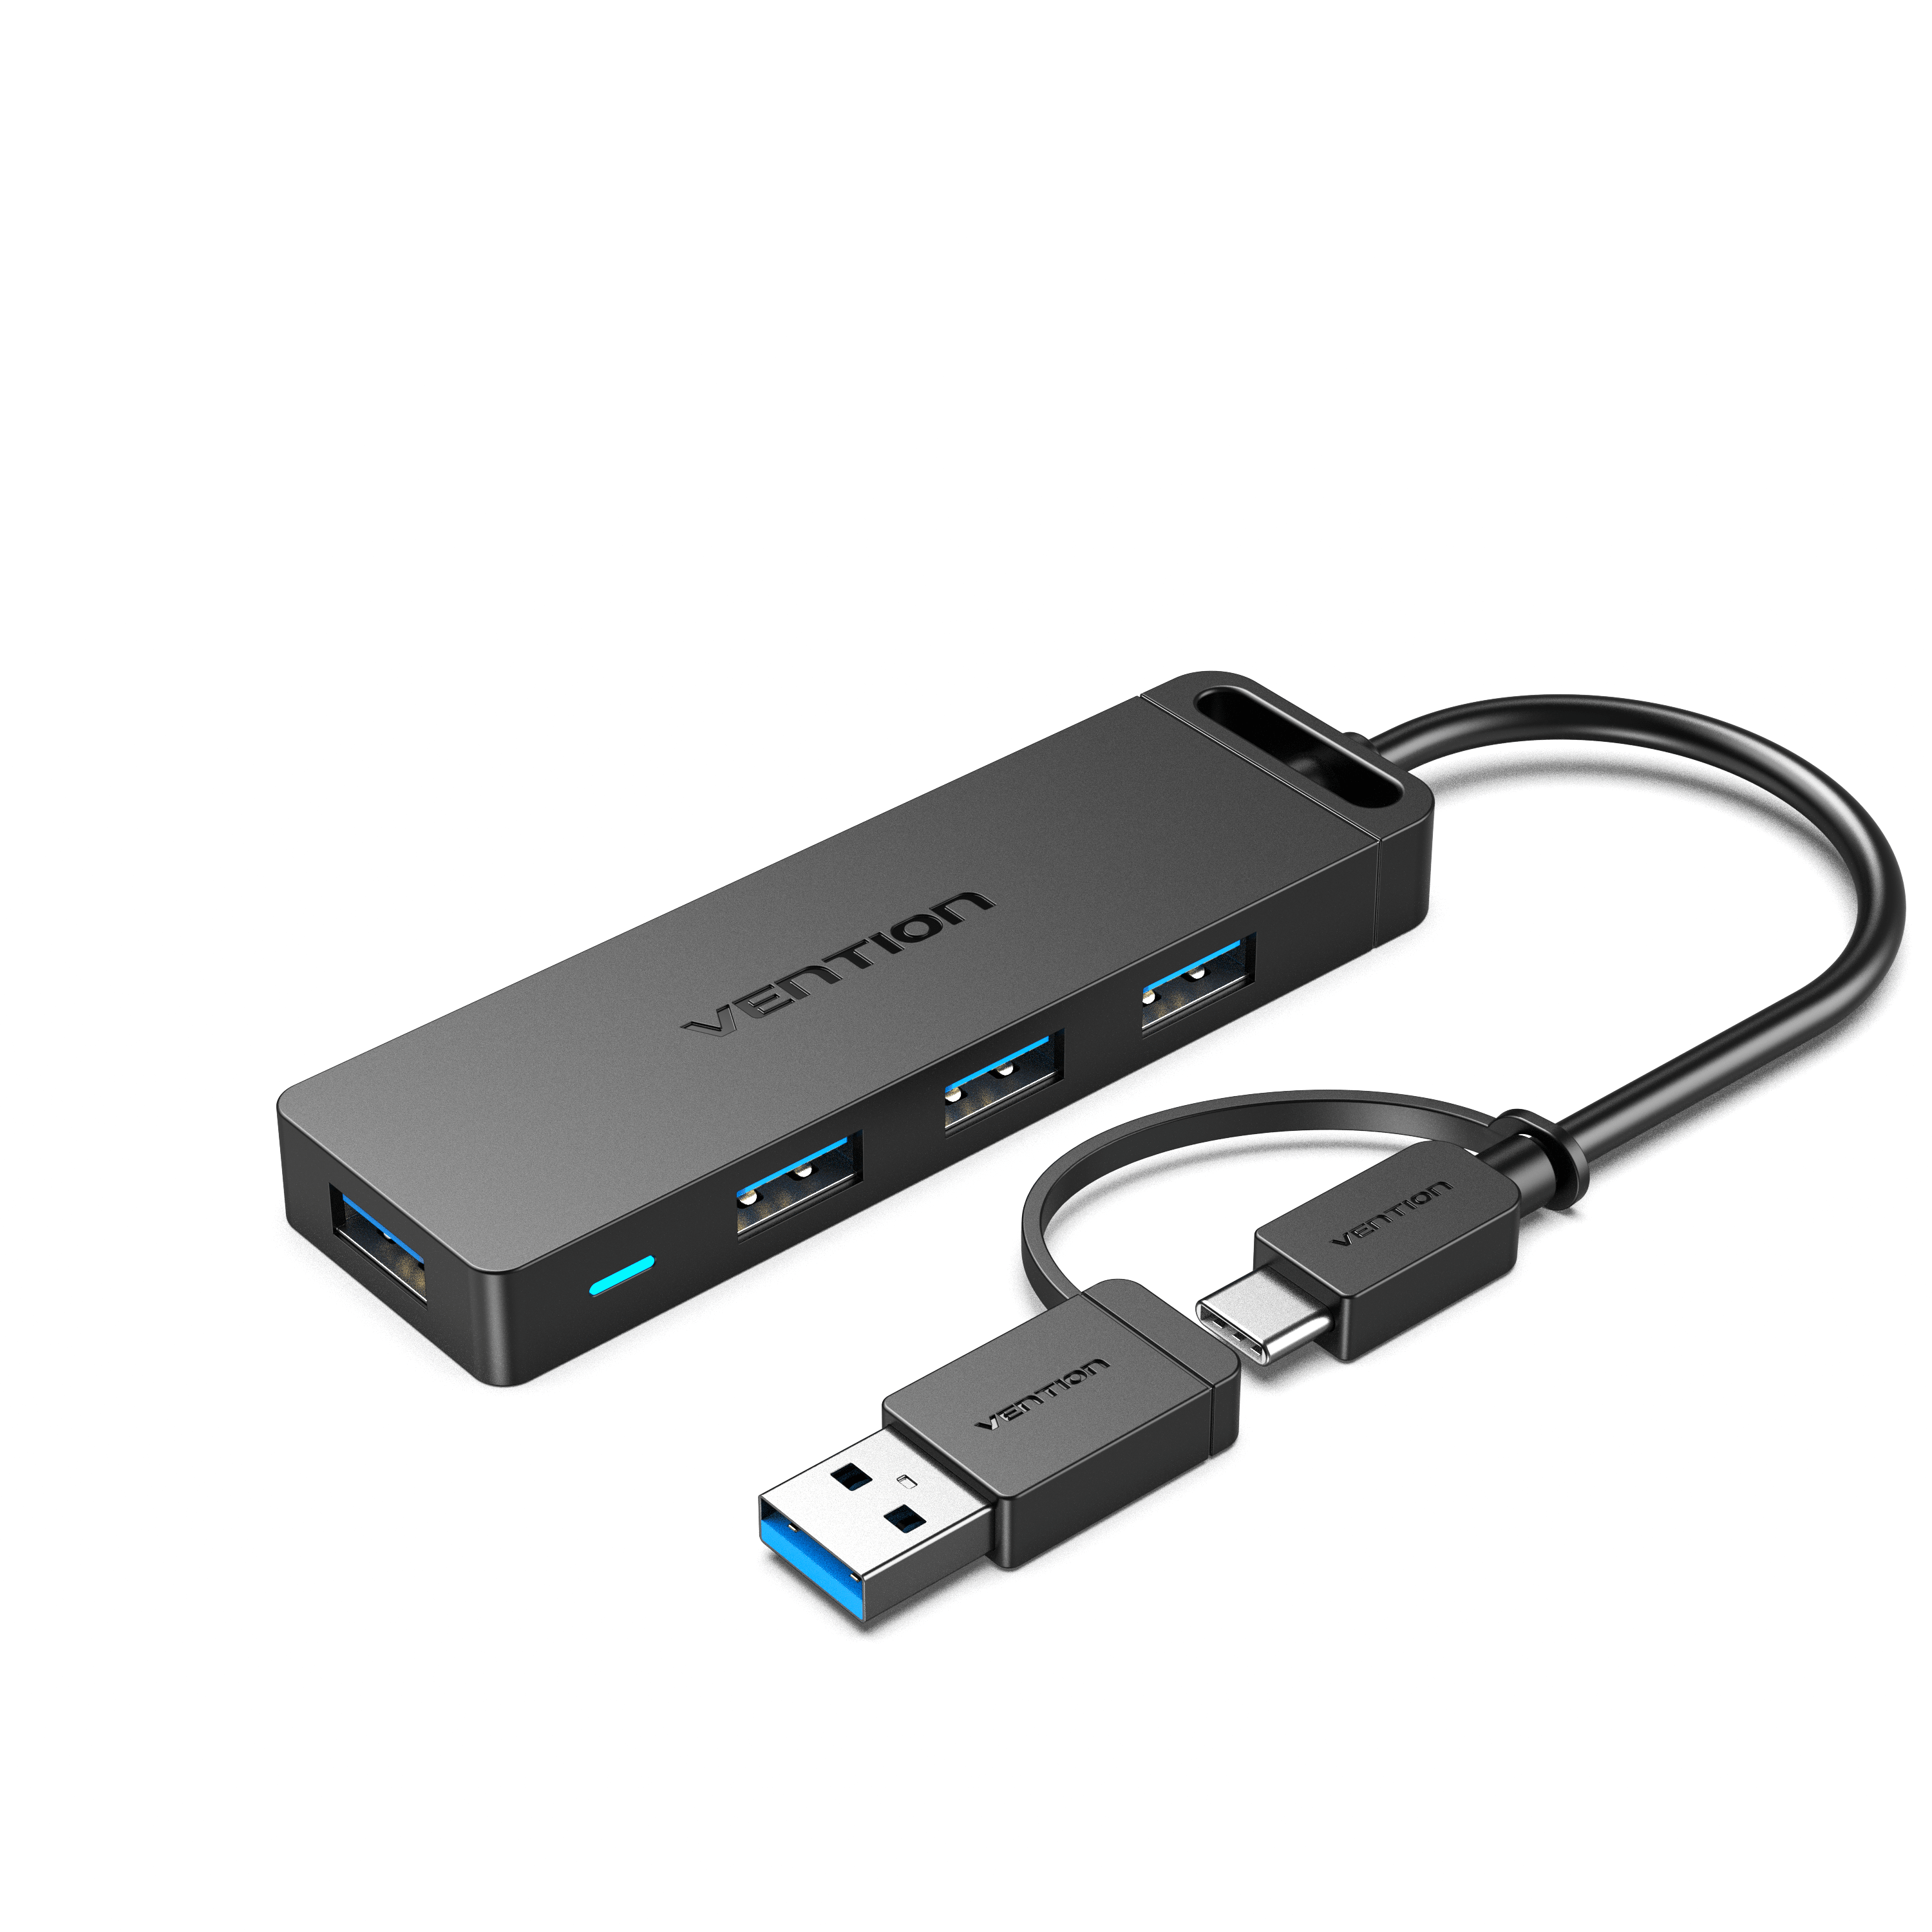 UGREEN USB C Hub 4 Ports USB Type C to USB 3.0 Hub Adapter with